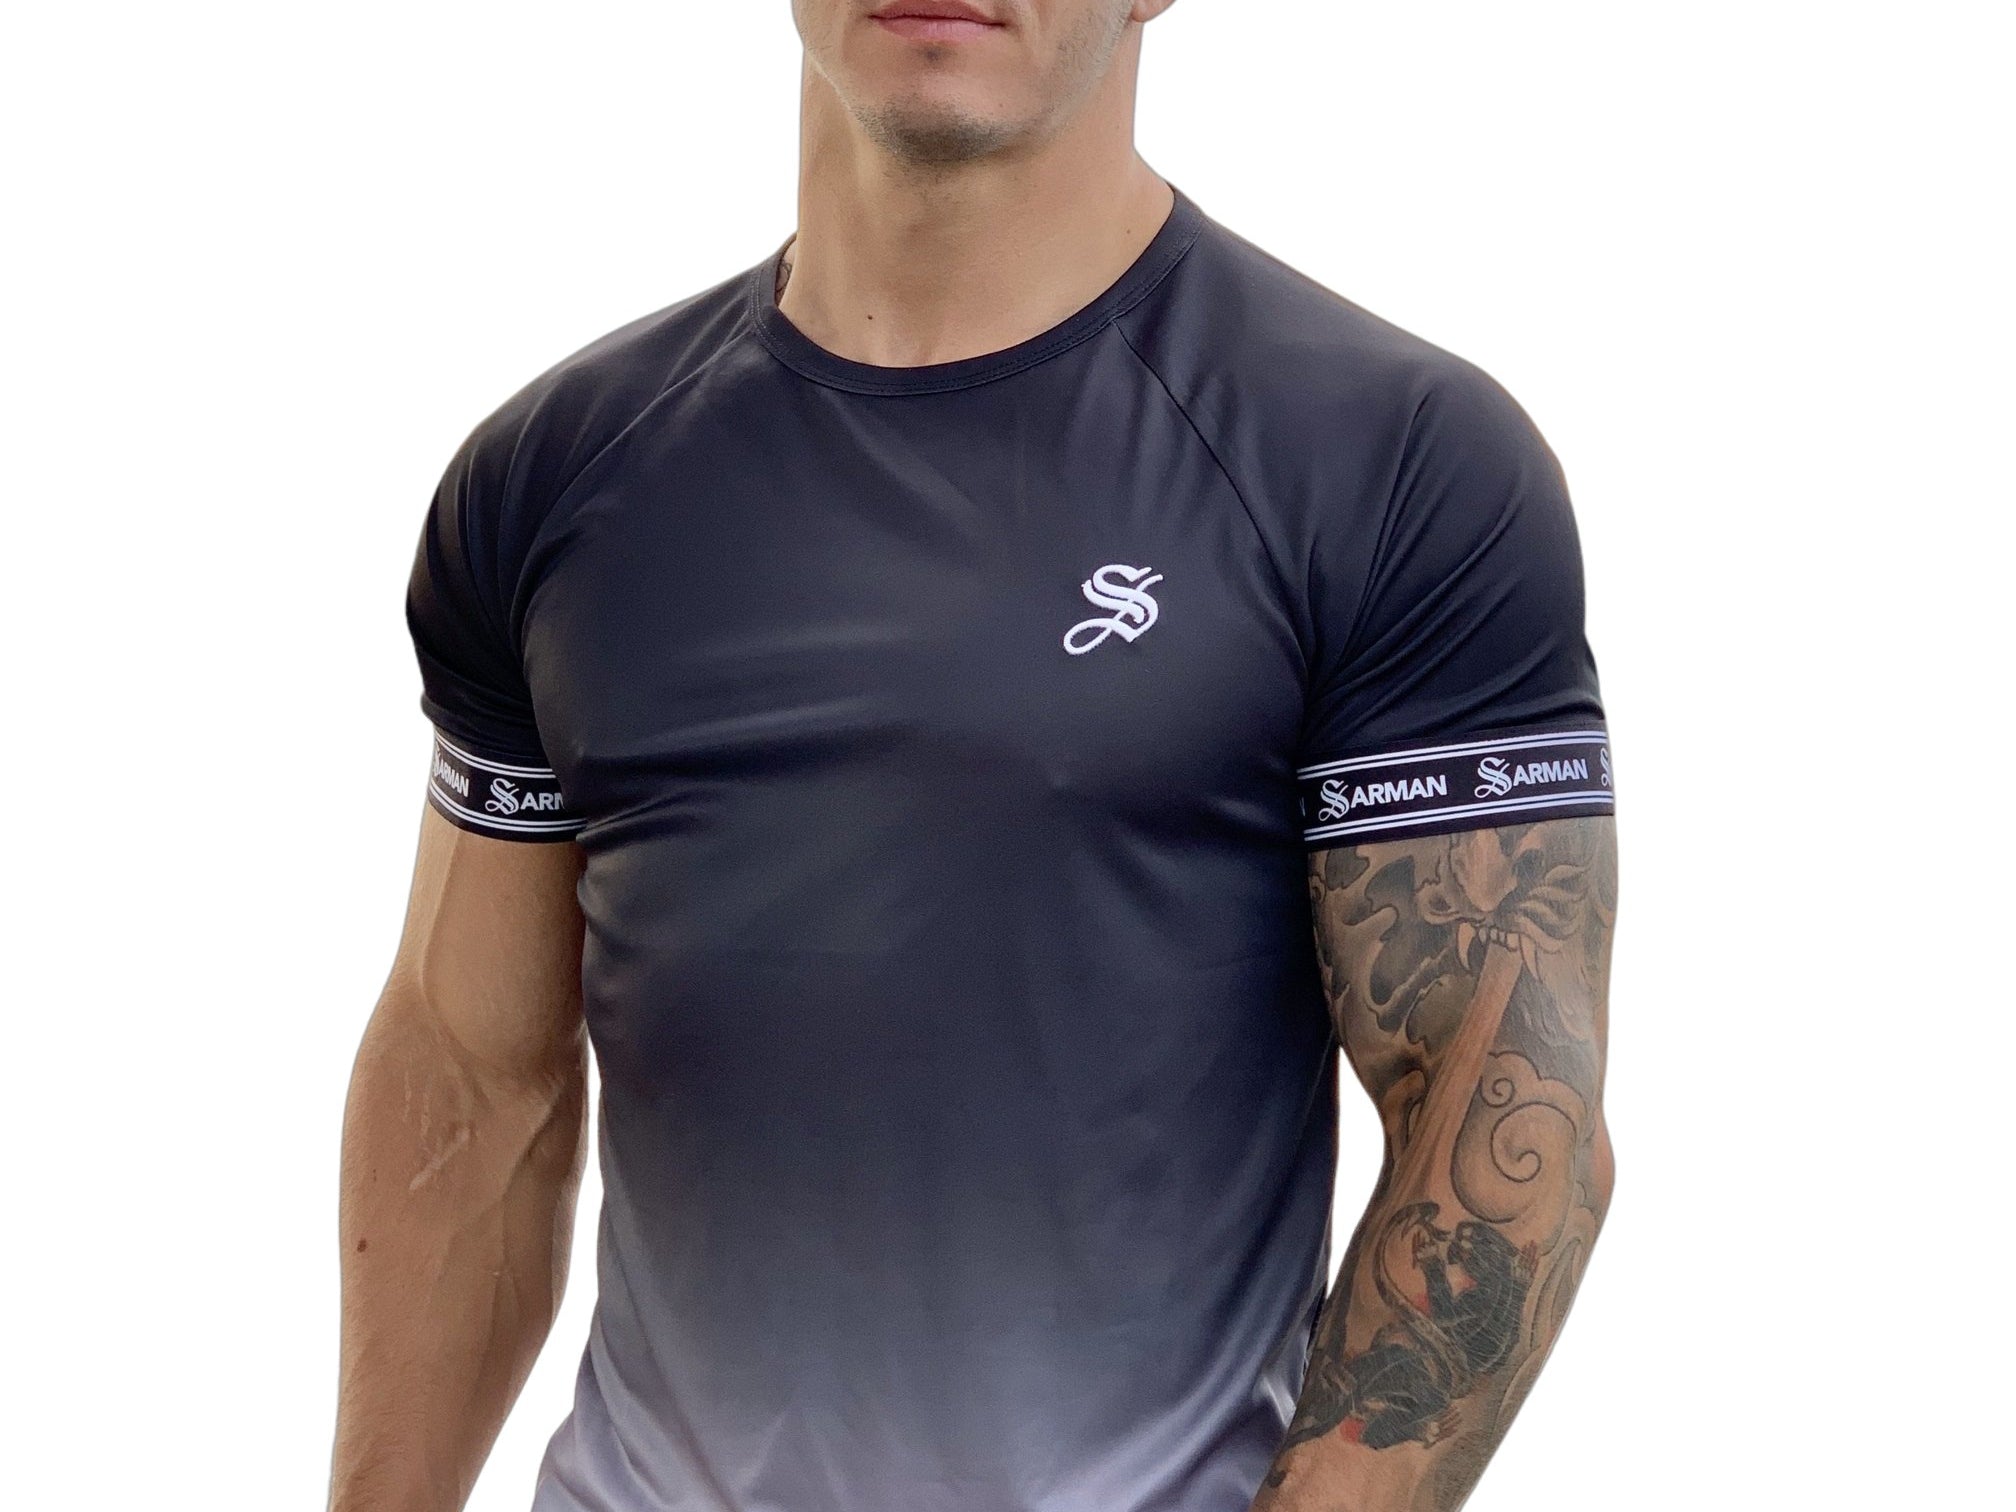 Zoho - Black T-shirt for Men - Sarman Fashion - Wholesale Clothing Fashion Brand for Men from Canada